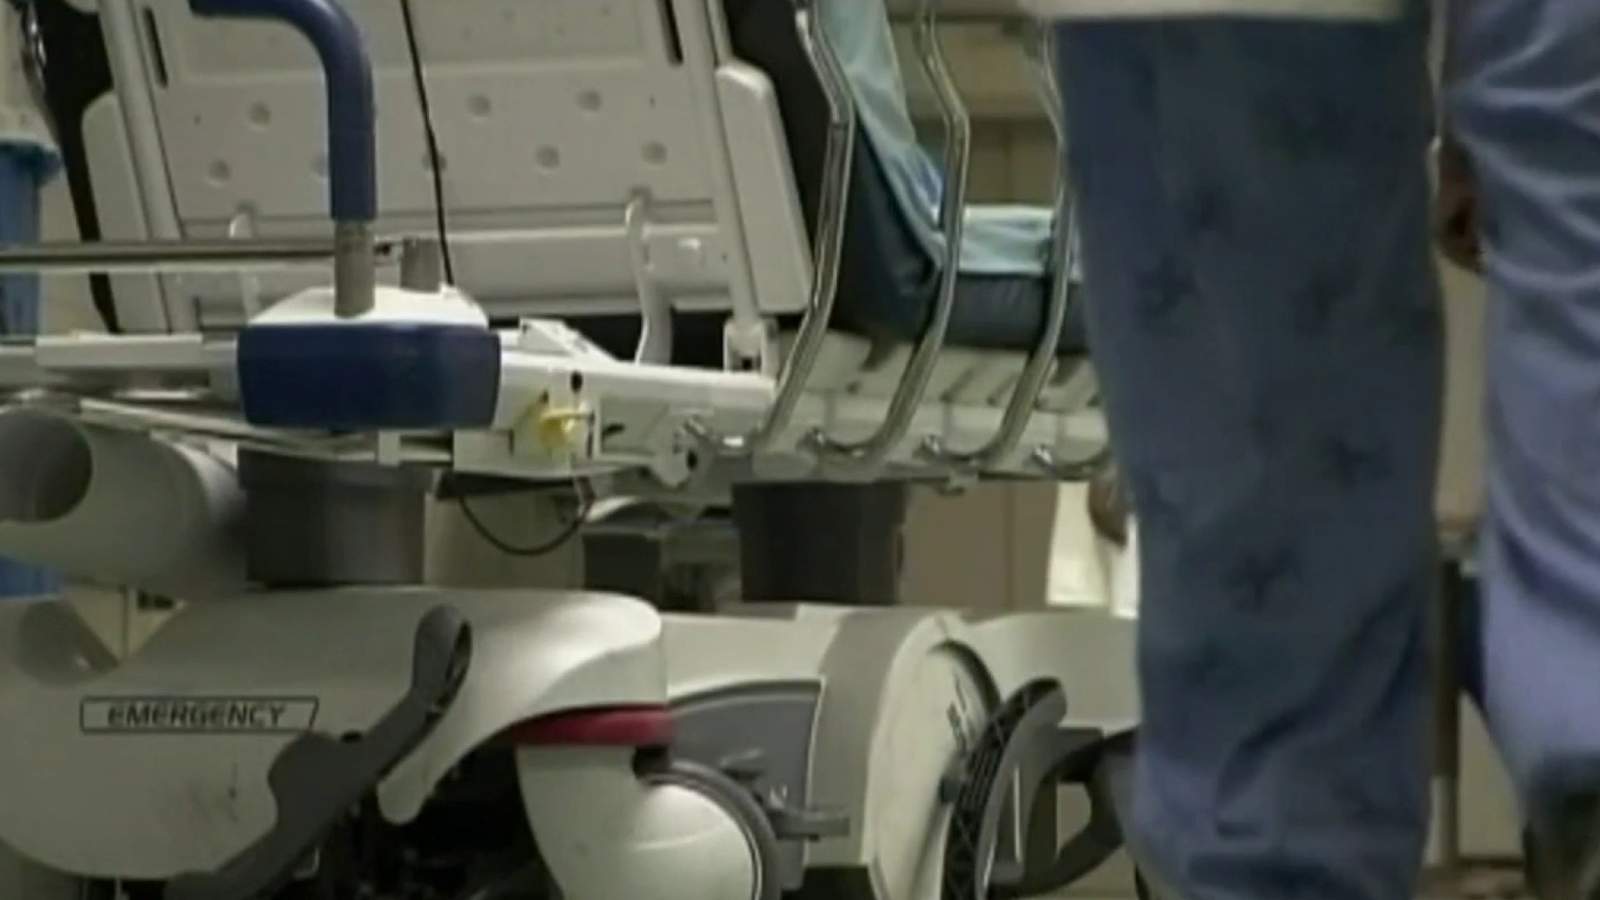 Michigan’s latest COVID surge has Metro Detroit hospitals nearing capacity